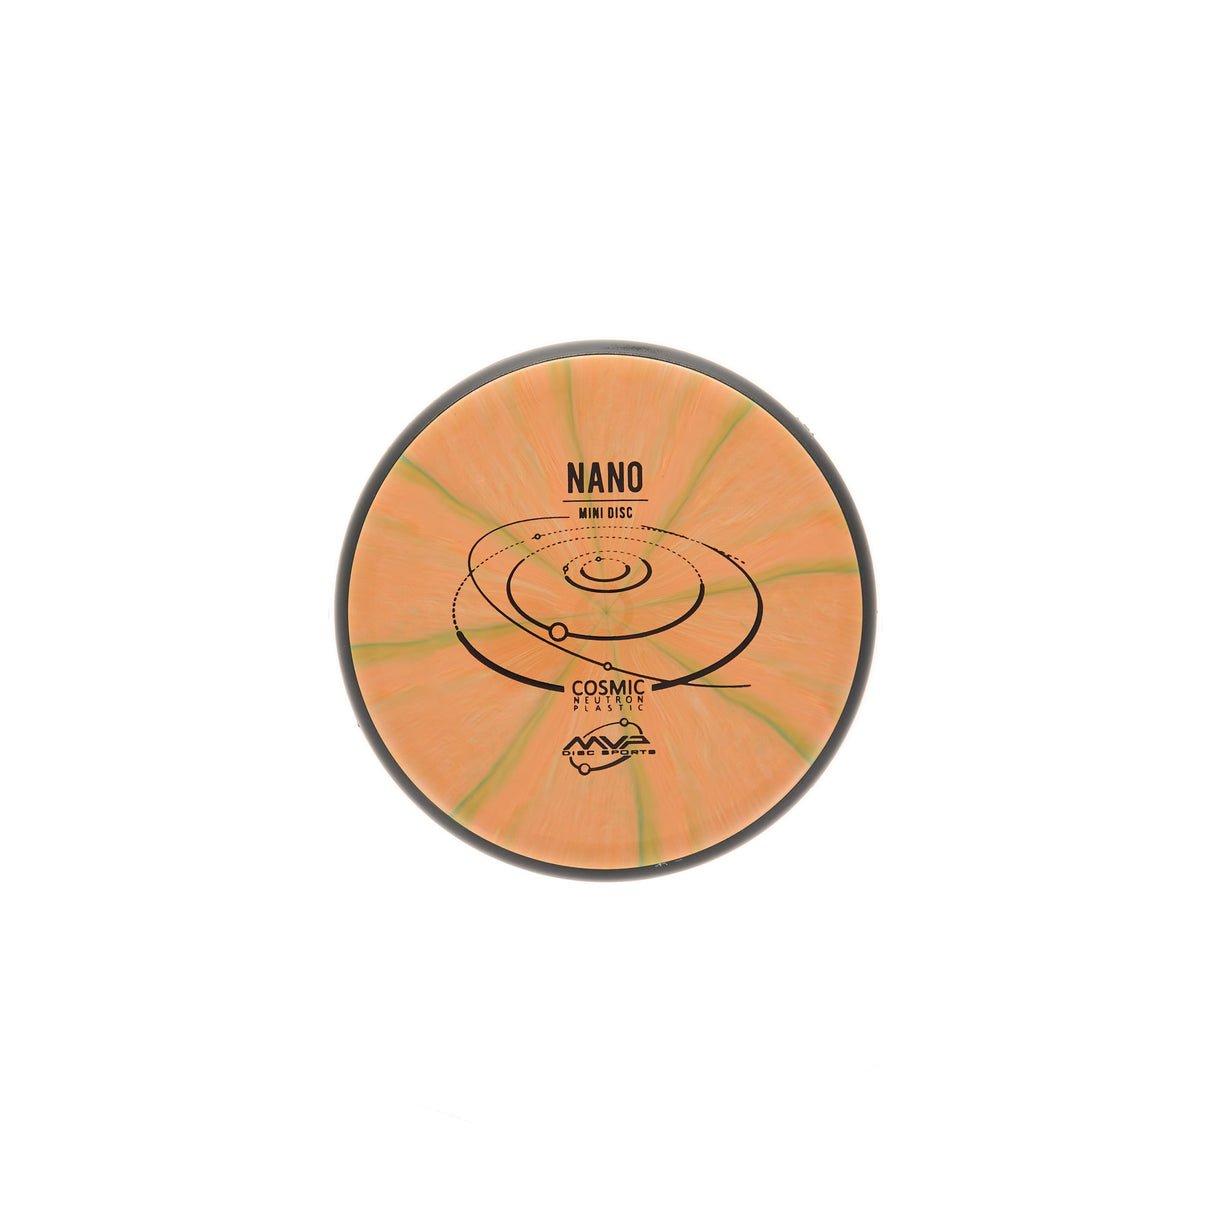 MVP Nano - Cosmic Neutron 29g | Style 0016